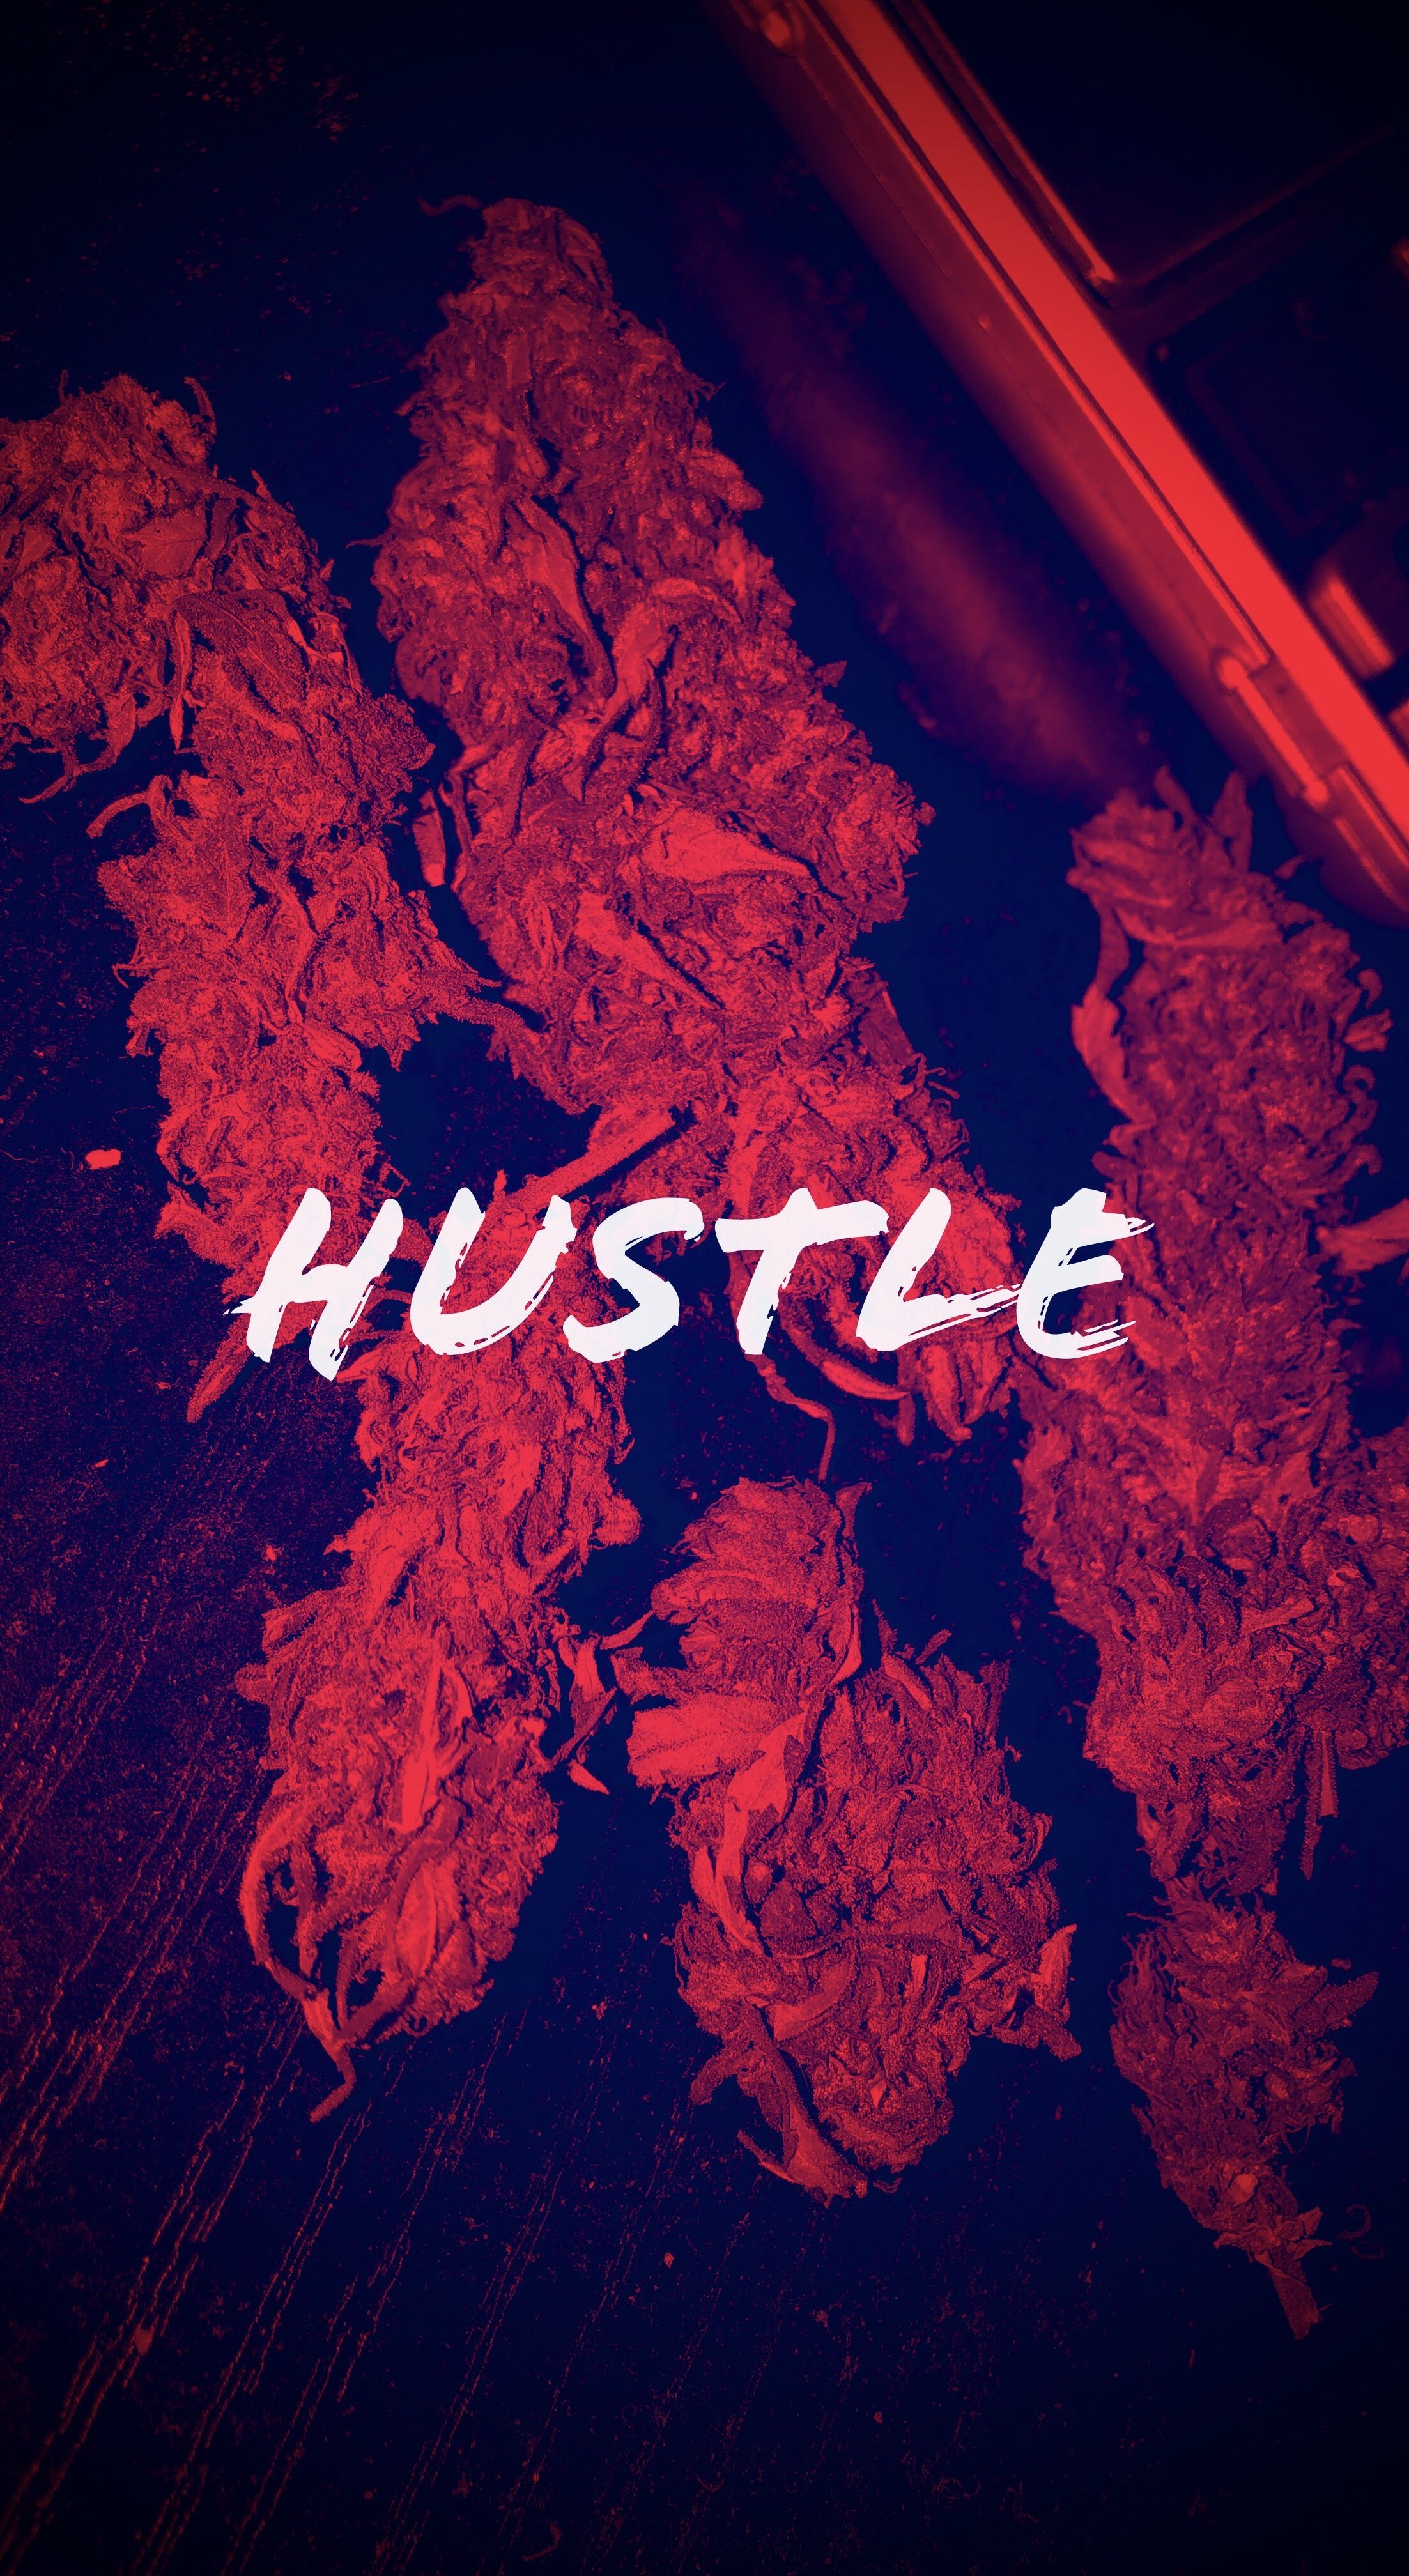 Always Hustle Cash Poster - Hustle Shirt Club